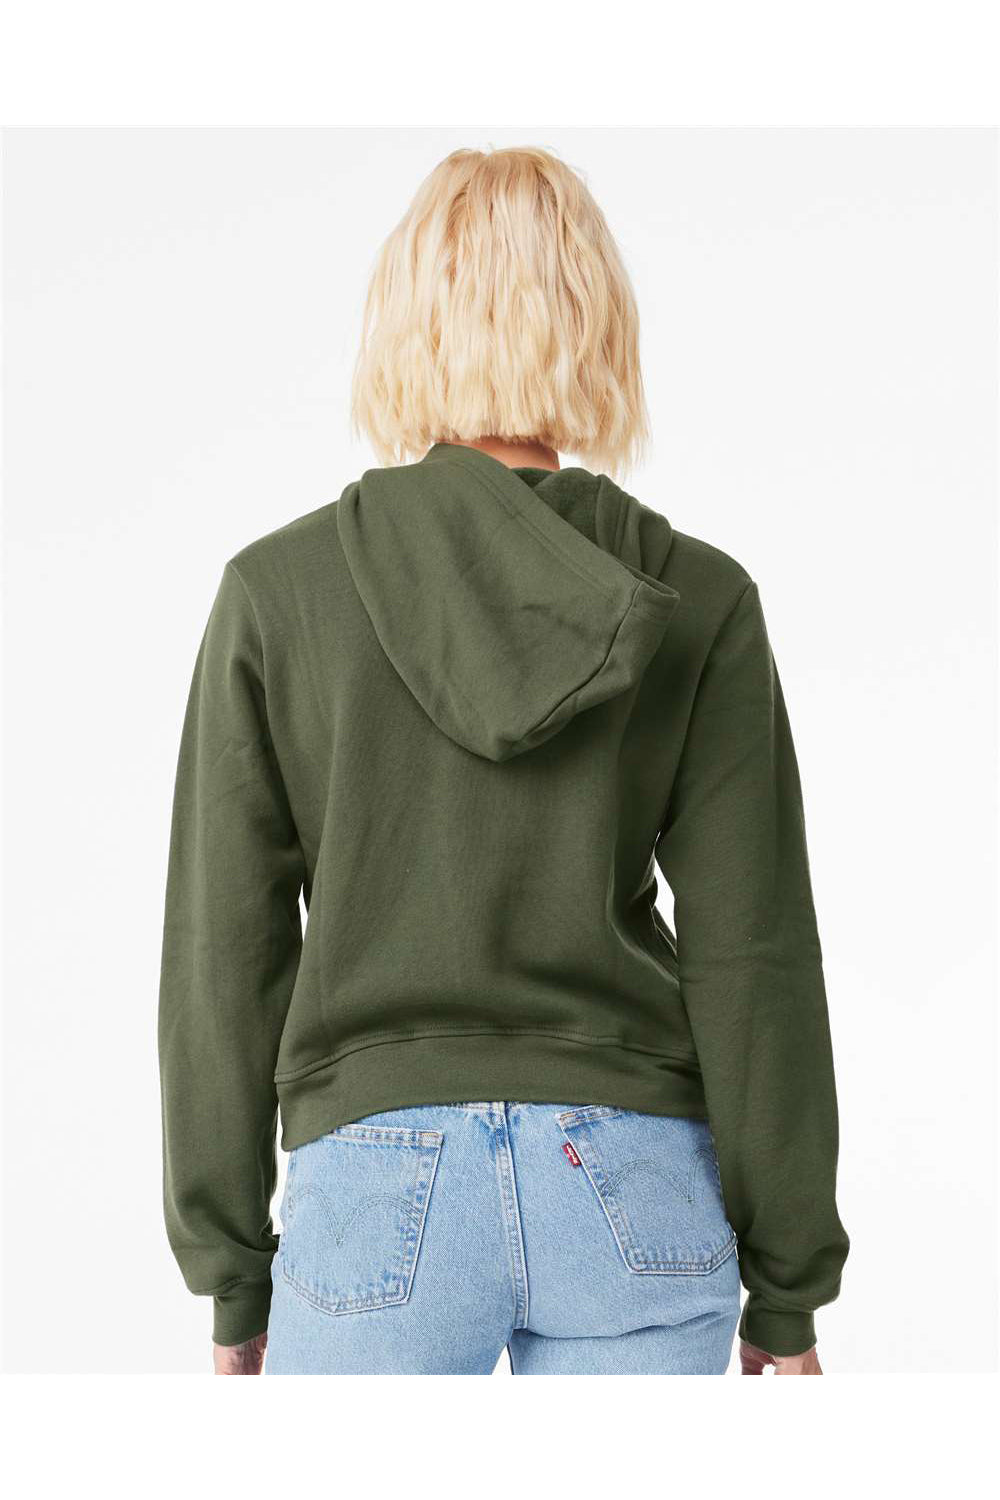 Bella + Canvas 7519 Womens Classic Hooded Sweatshirt Hoodie Military Green Model Back